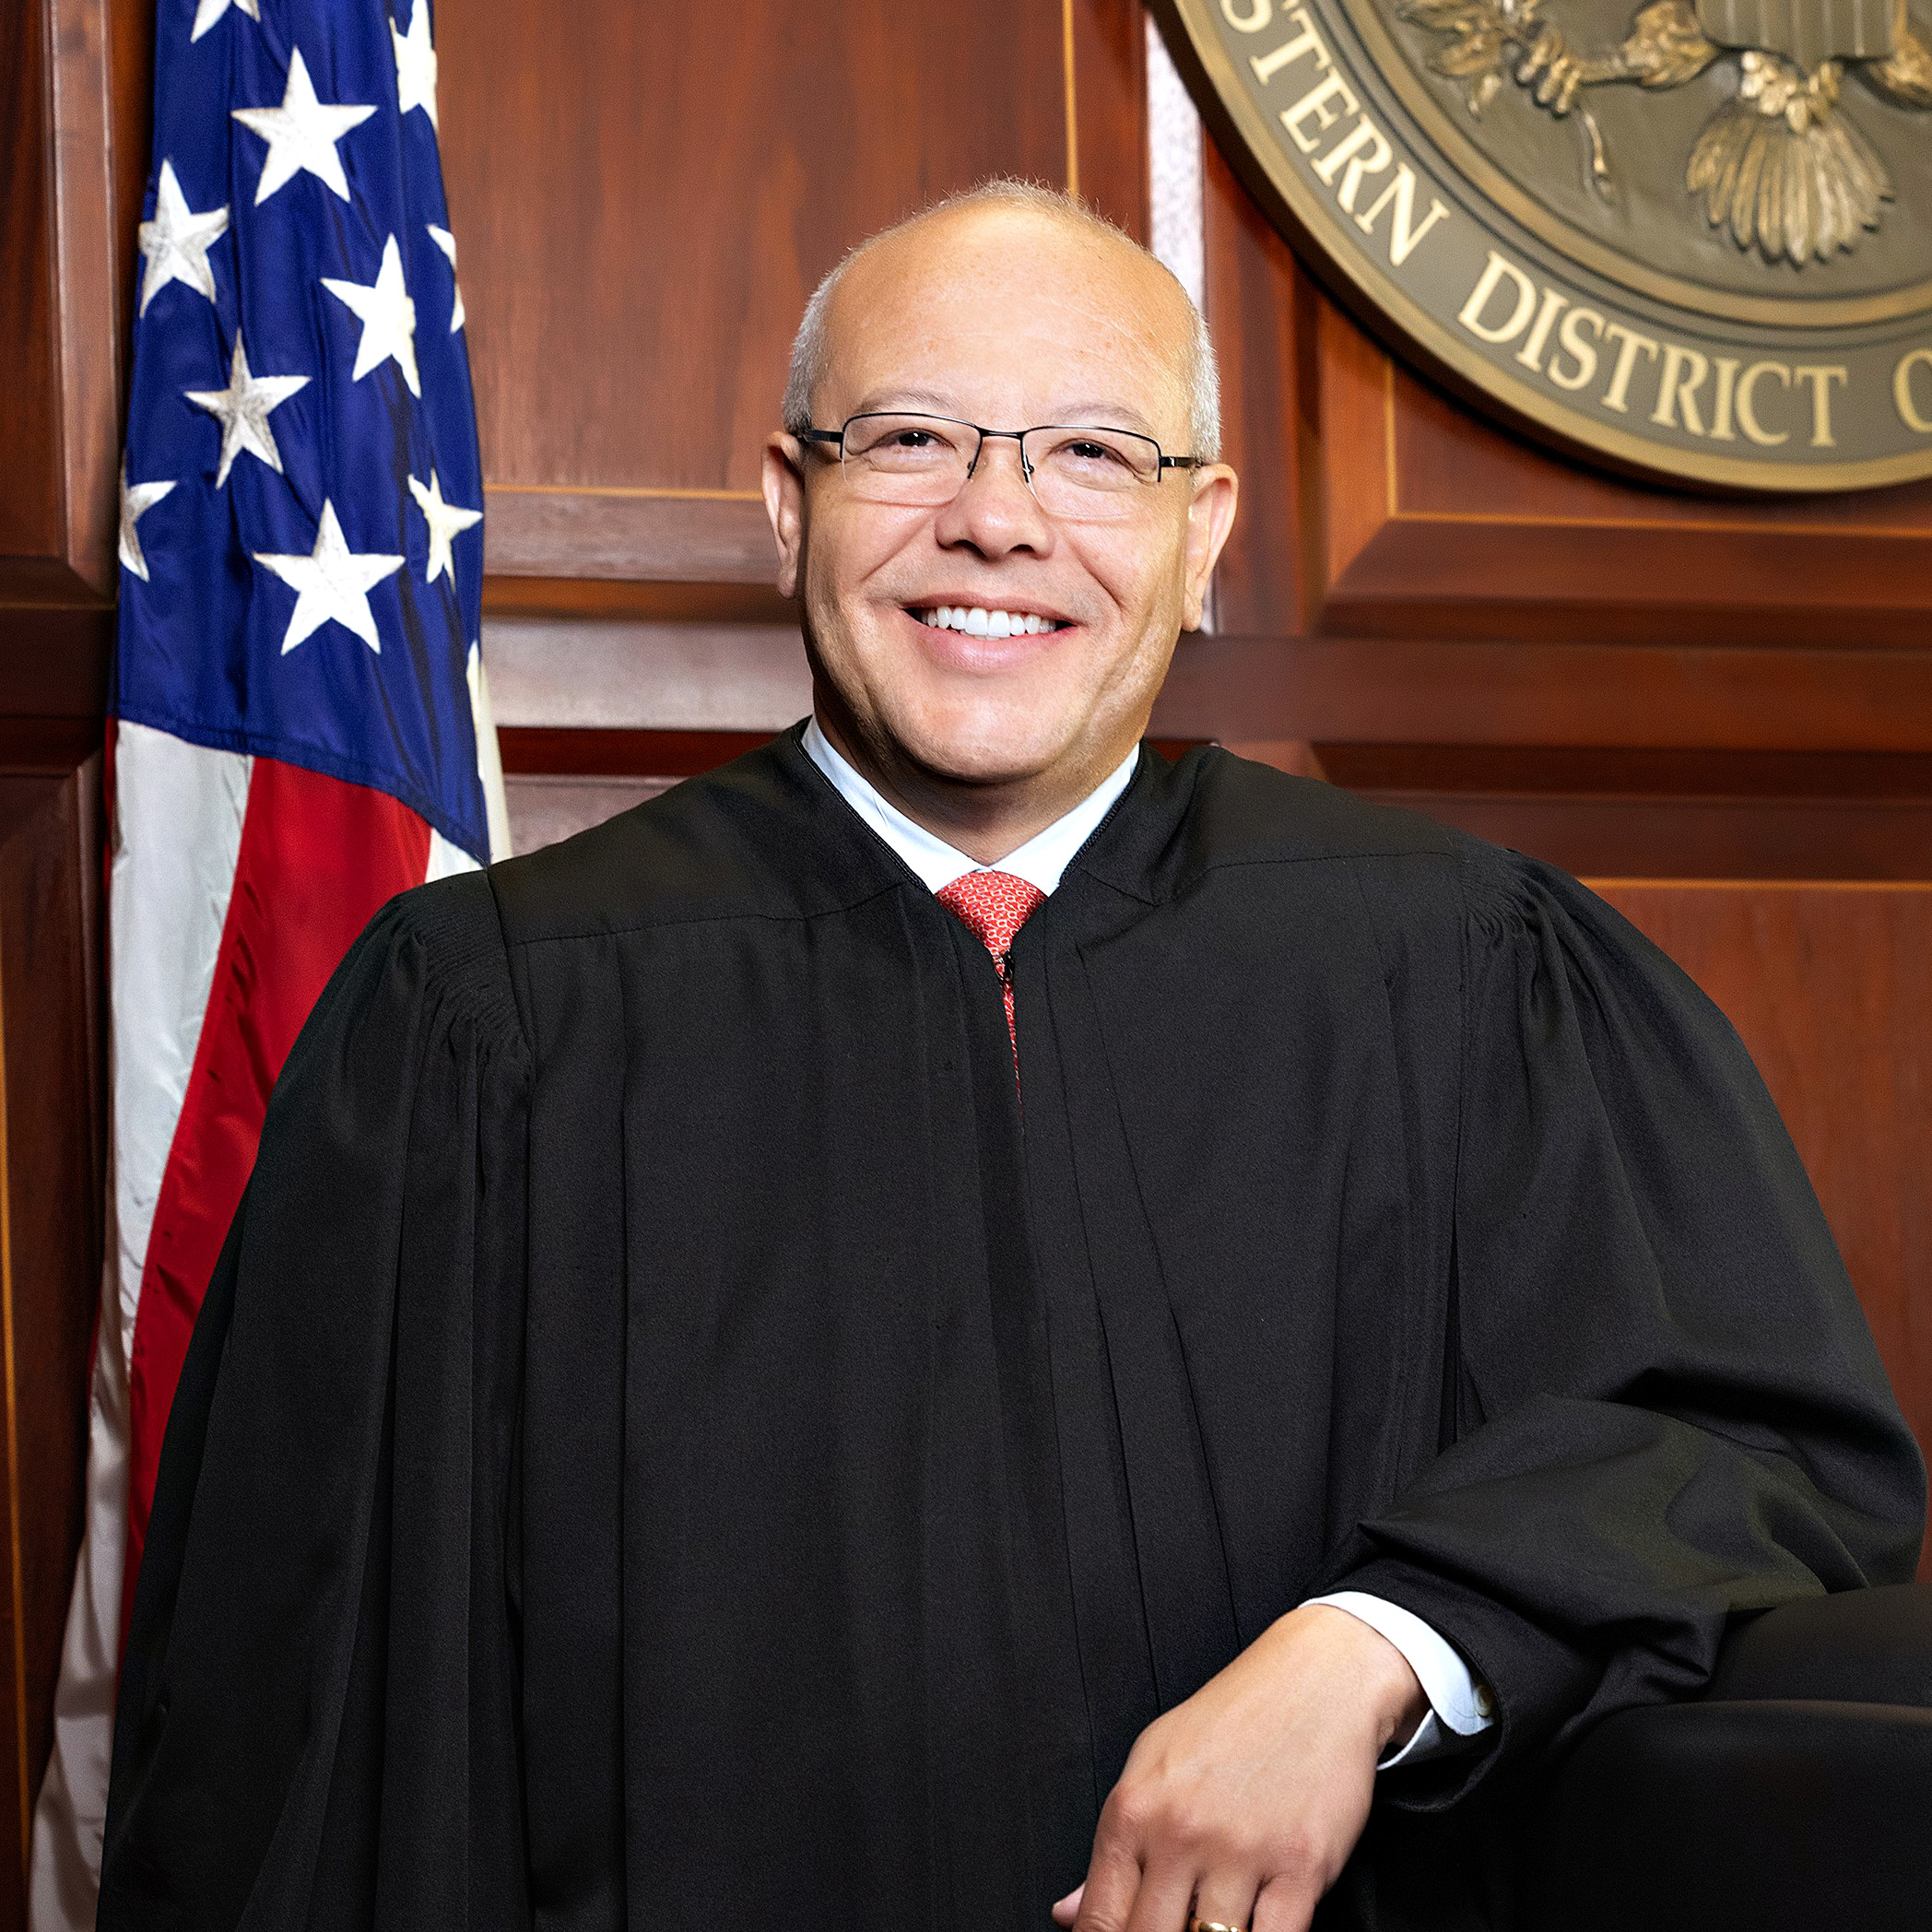 Judge Darrel J. Papillion